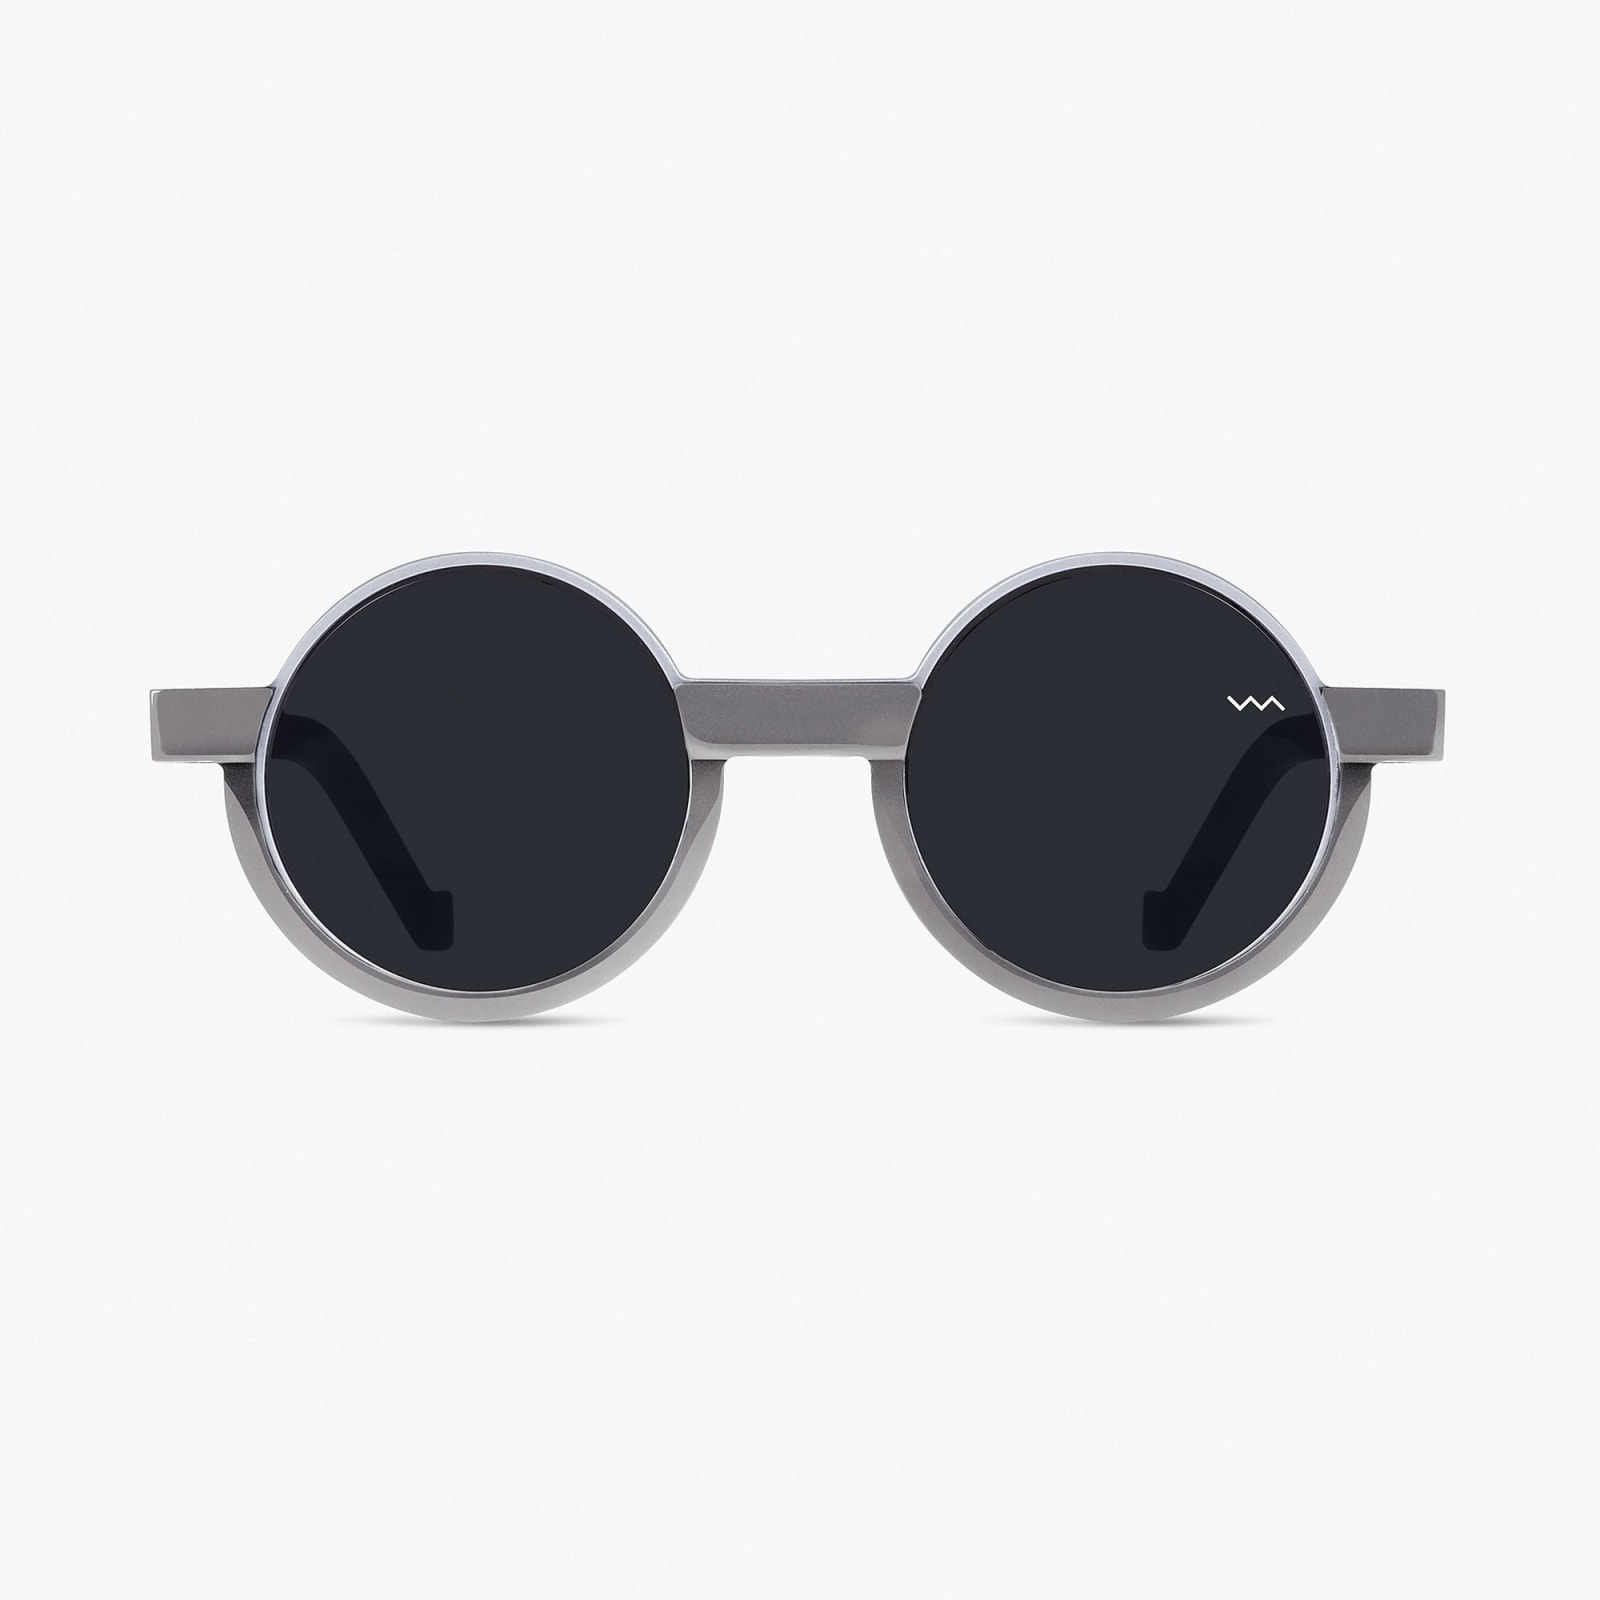 Cl0011 - Light Grey Sunglasses